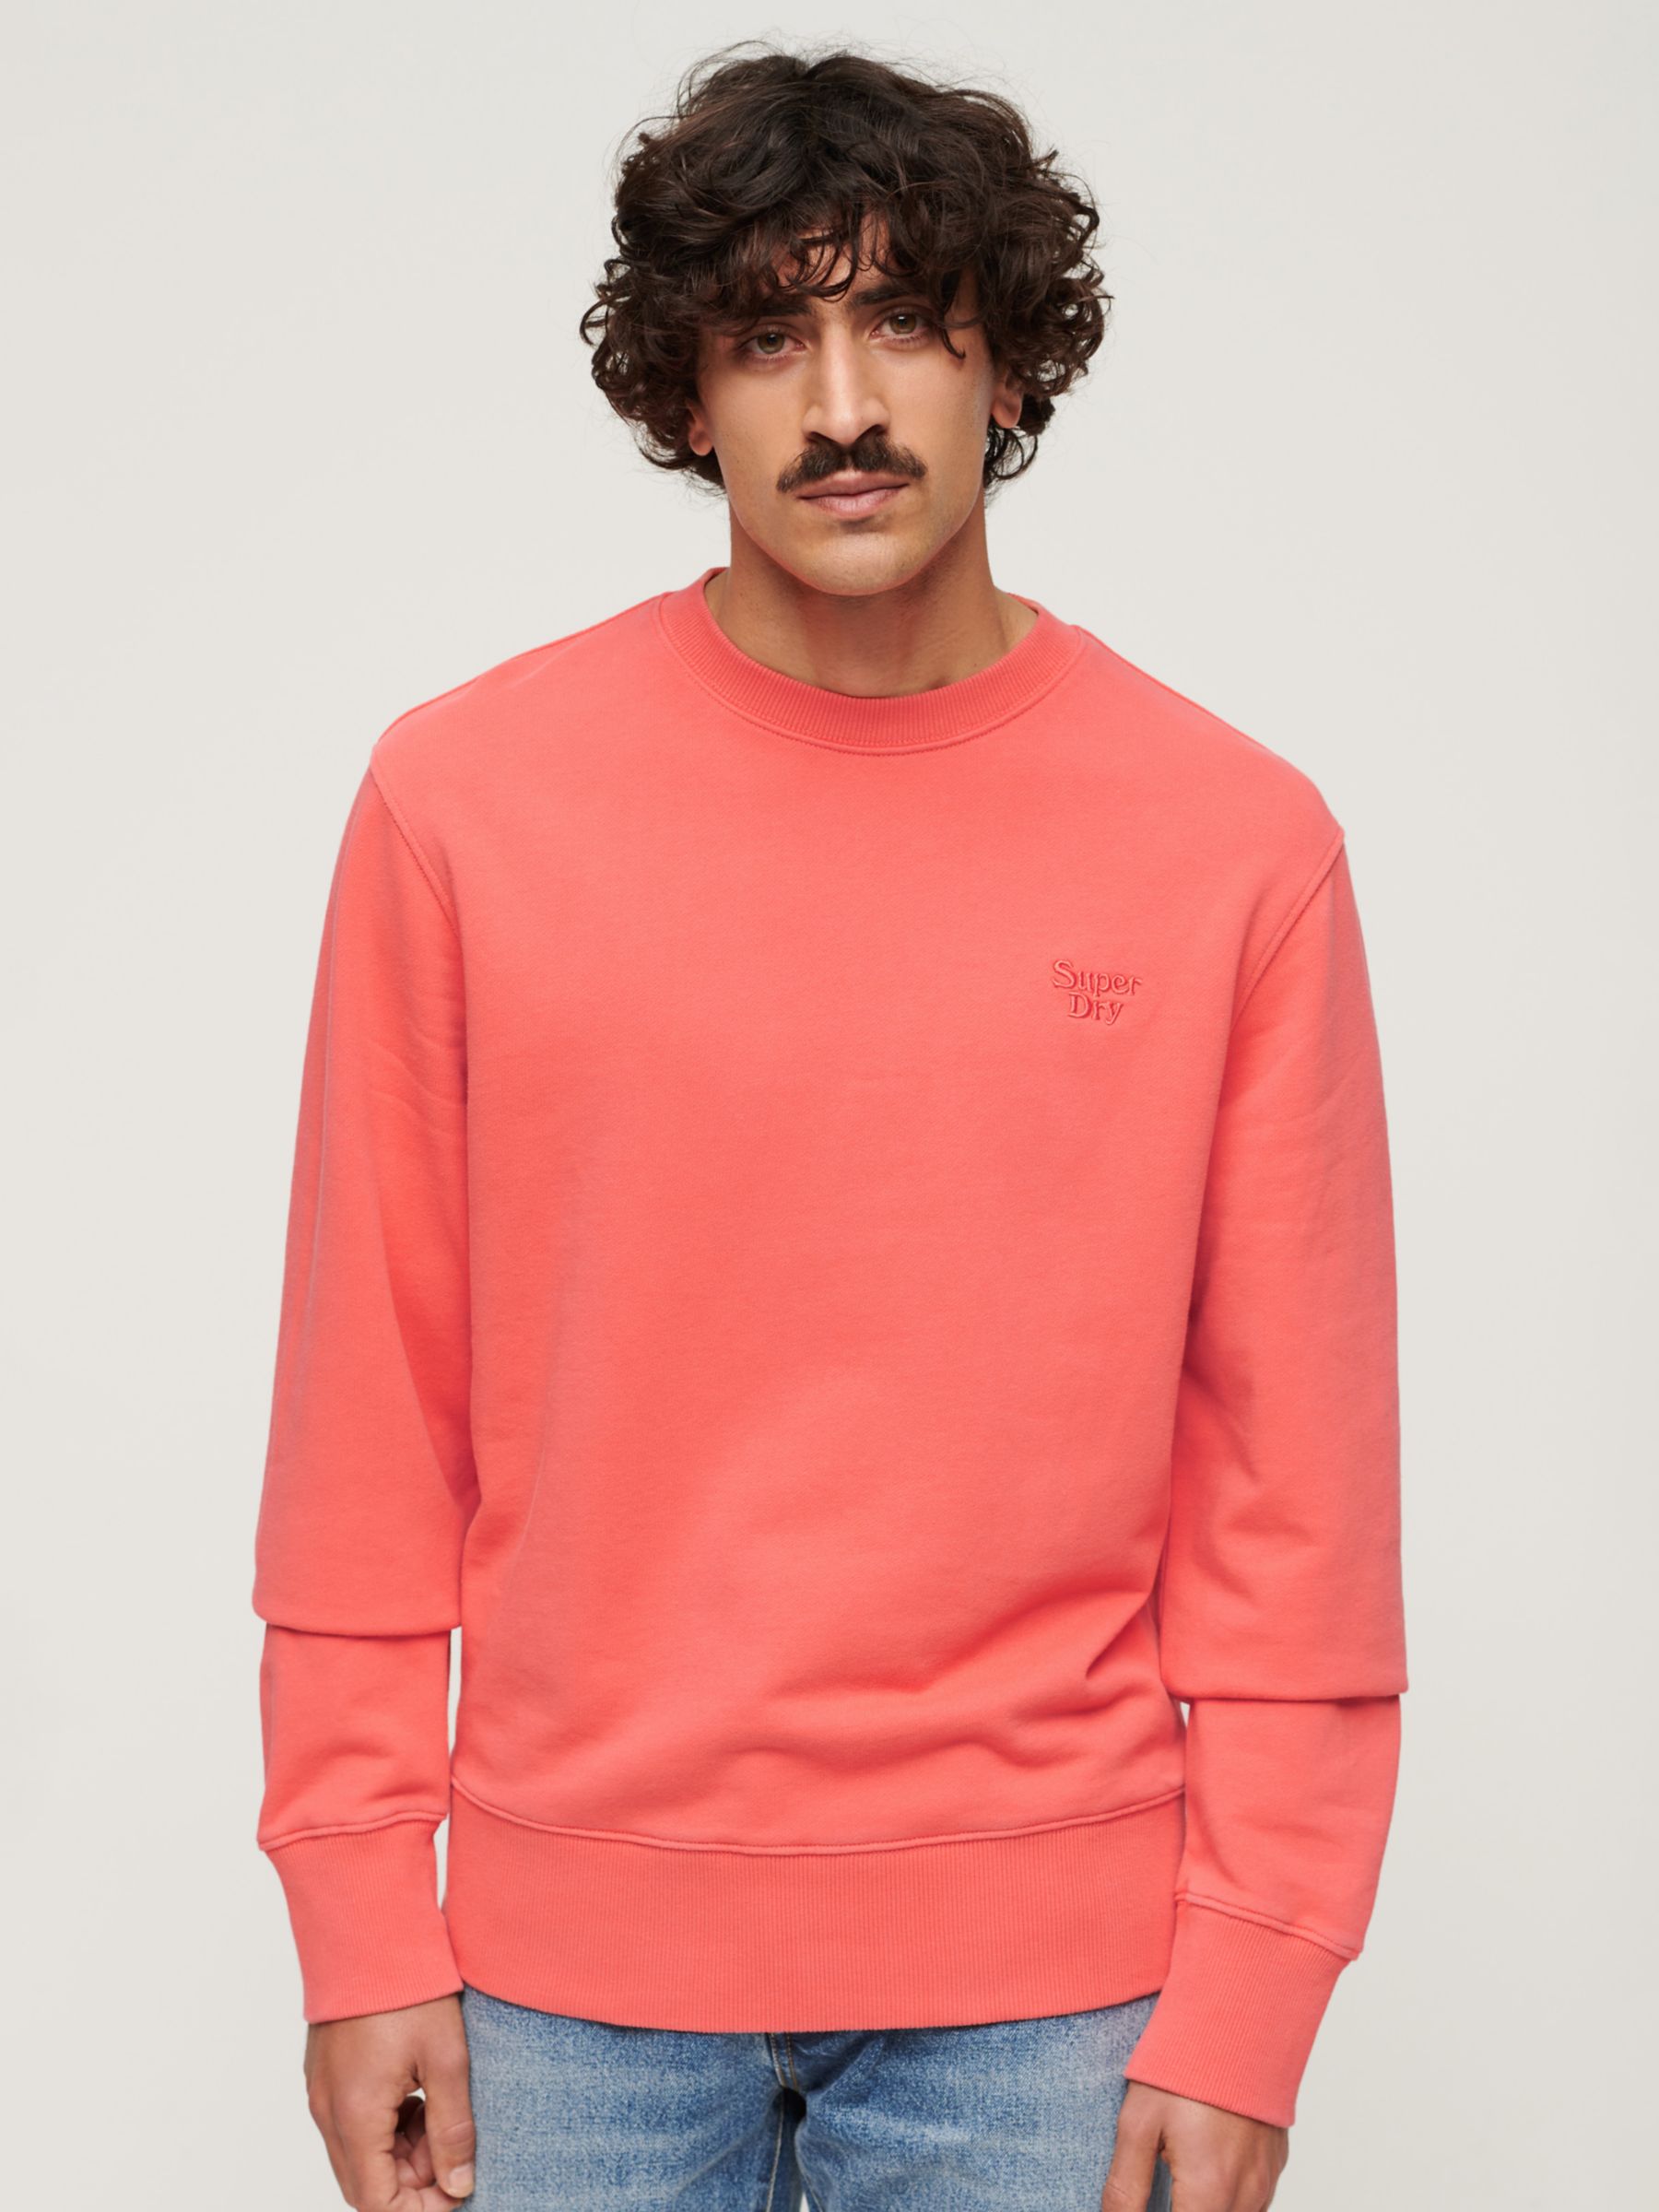 Superdry Vintage Washed Cotton Sweatshirt, Hot Coral, XXL